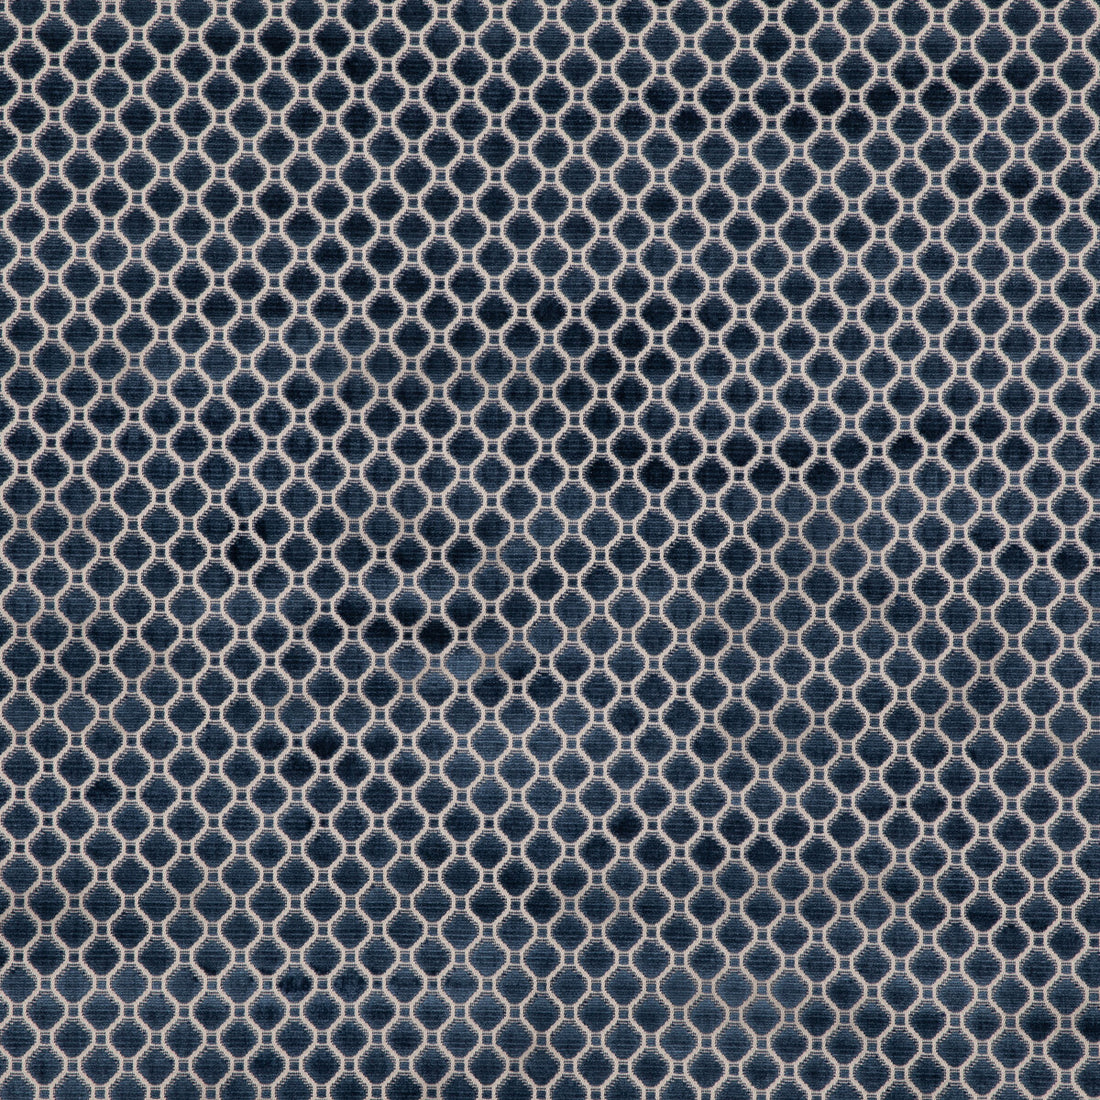 Indus Velvet fabric in indigo color - pattern BF10826.680.0 - by G P &amp; J Baker in the Coromandel Velvets collection